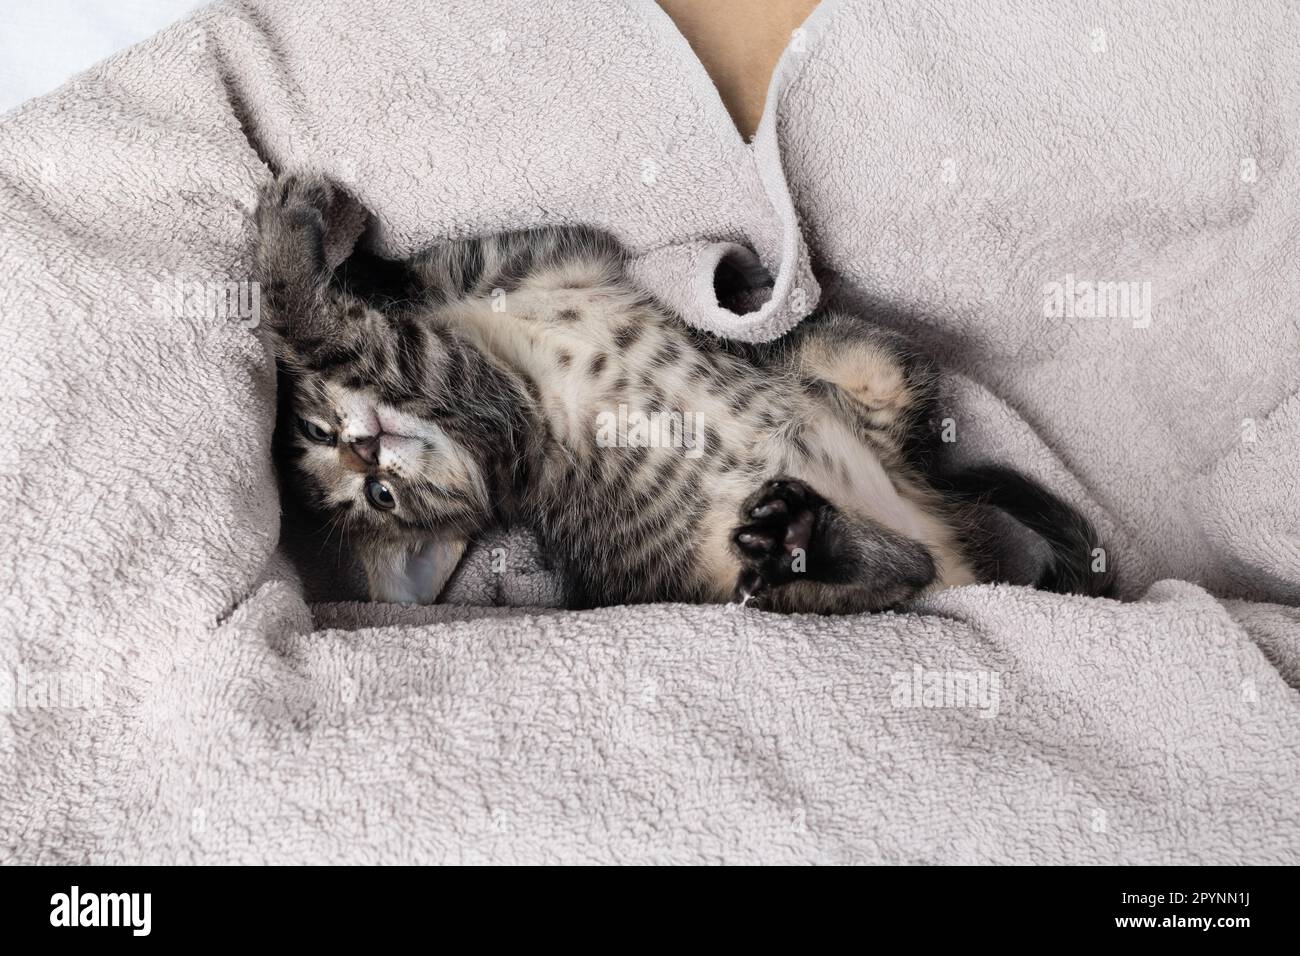 Little naughty kitten playing on soft towel. Stock Photo